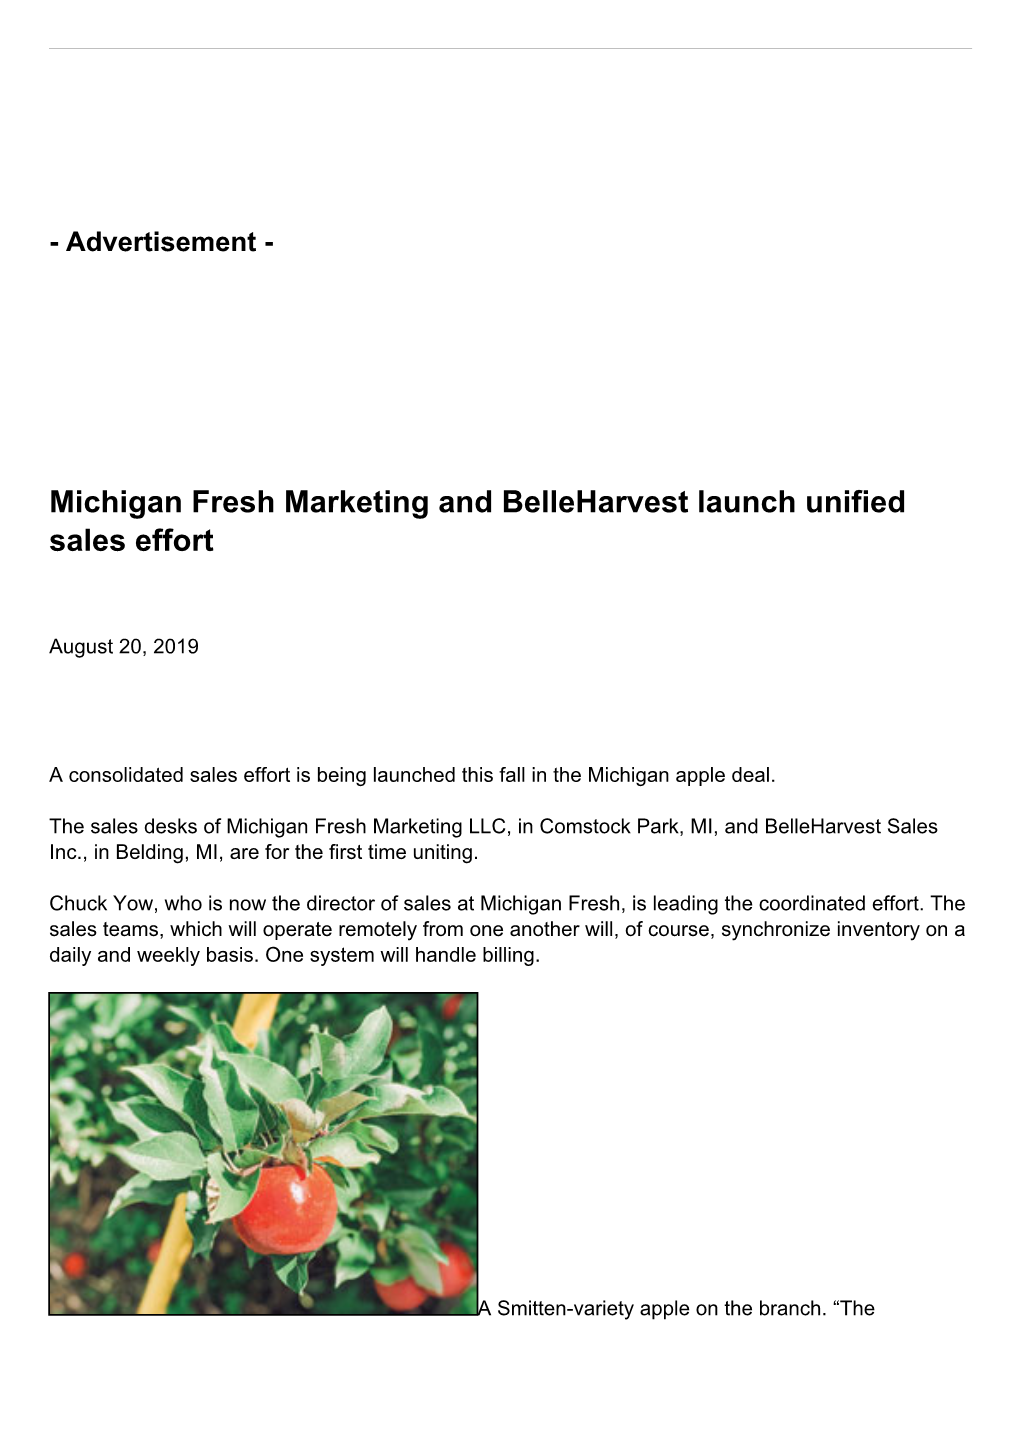 Michigan Fresh Marketing and Belleharvest Launch Unified Sales Effort